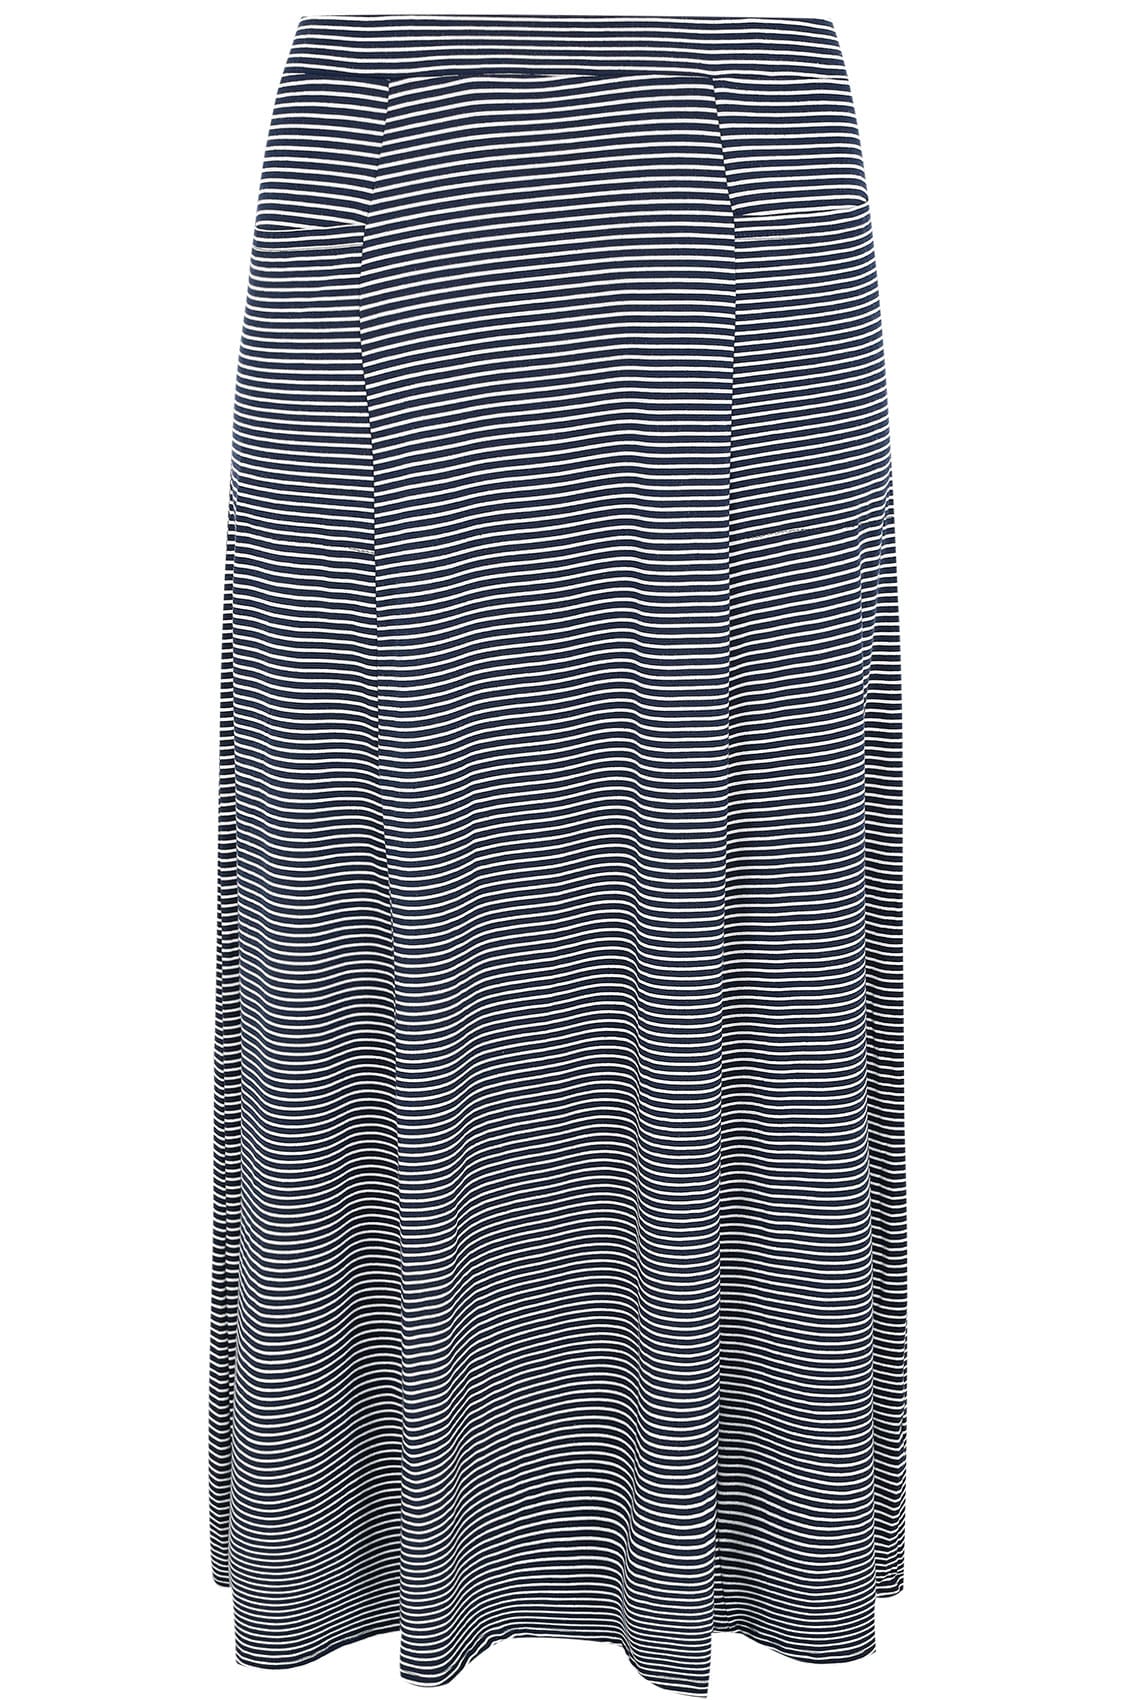 Navy & White Stripe Maxi Skirt With Pockets, Plus size 16 to 36